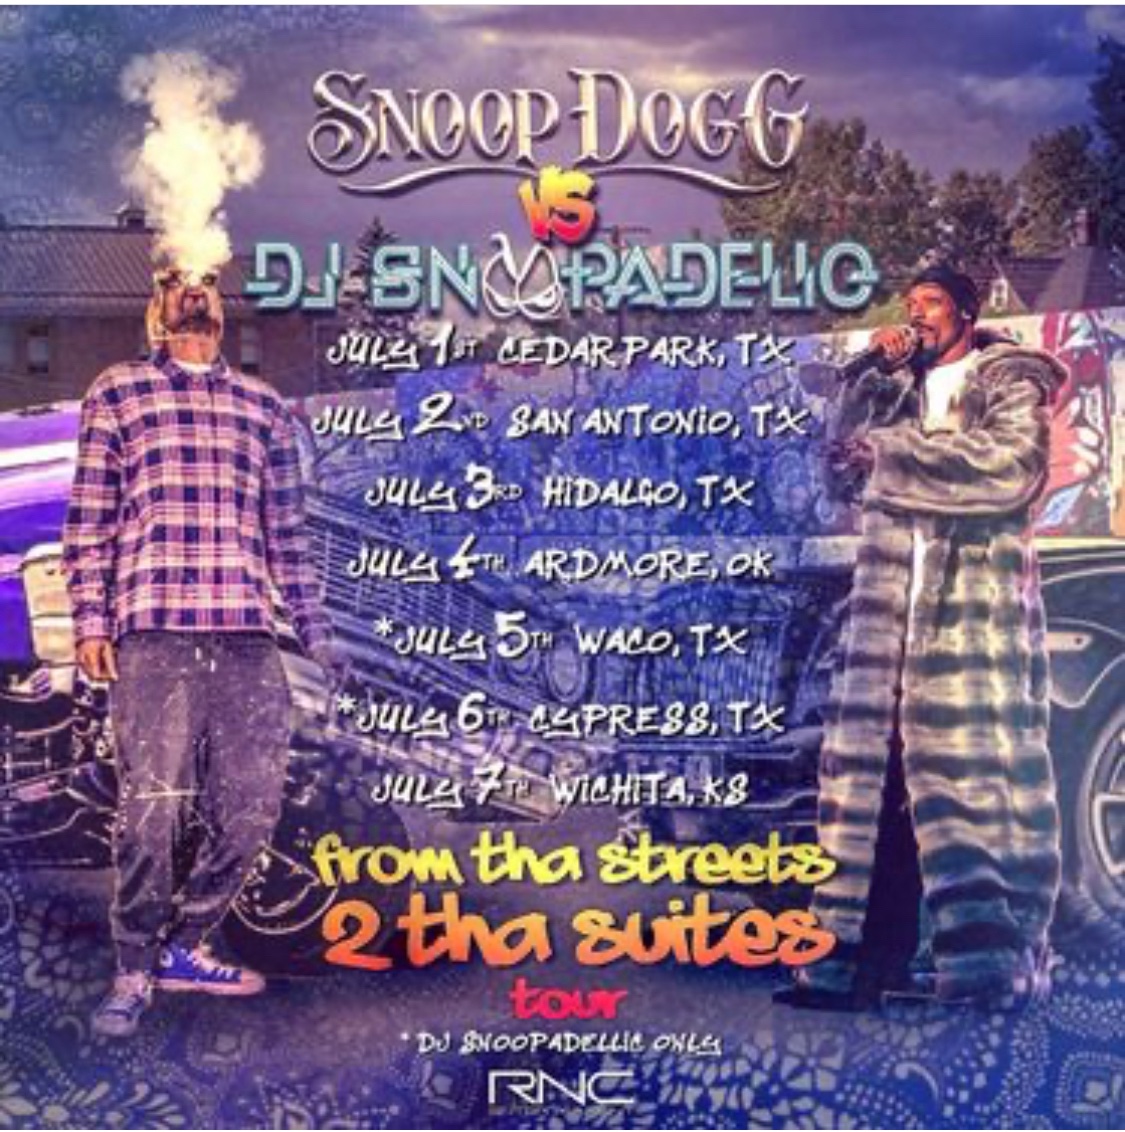 SNOOP DOGG vs DJ SNOOPADELIC TOUR JULY 1 - JULY 7 TIX ON SALE NOW 